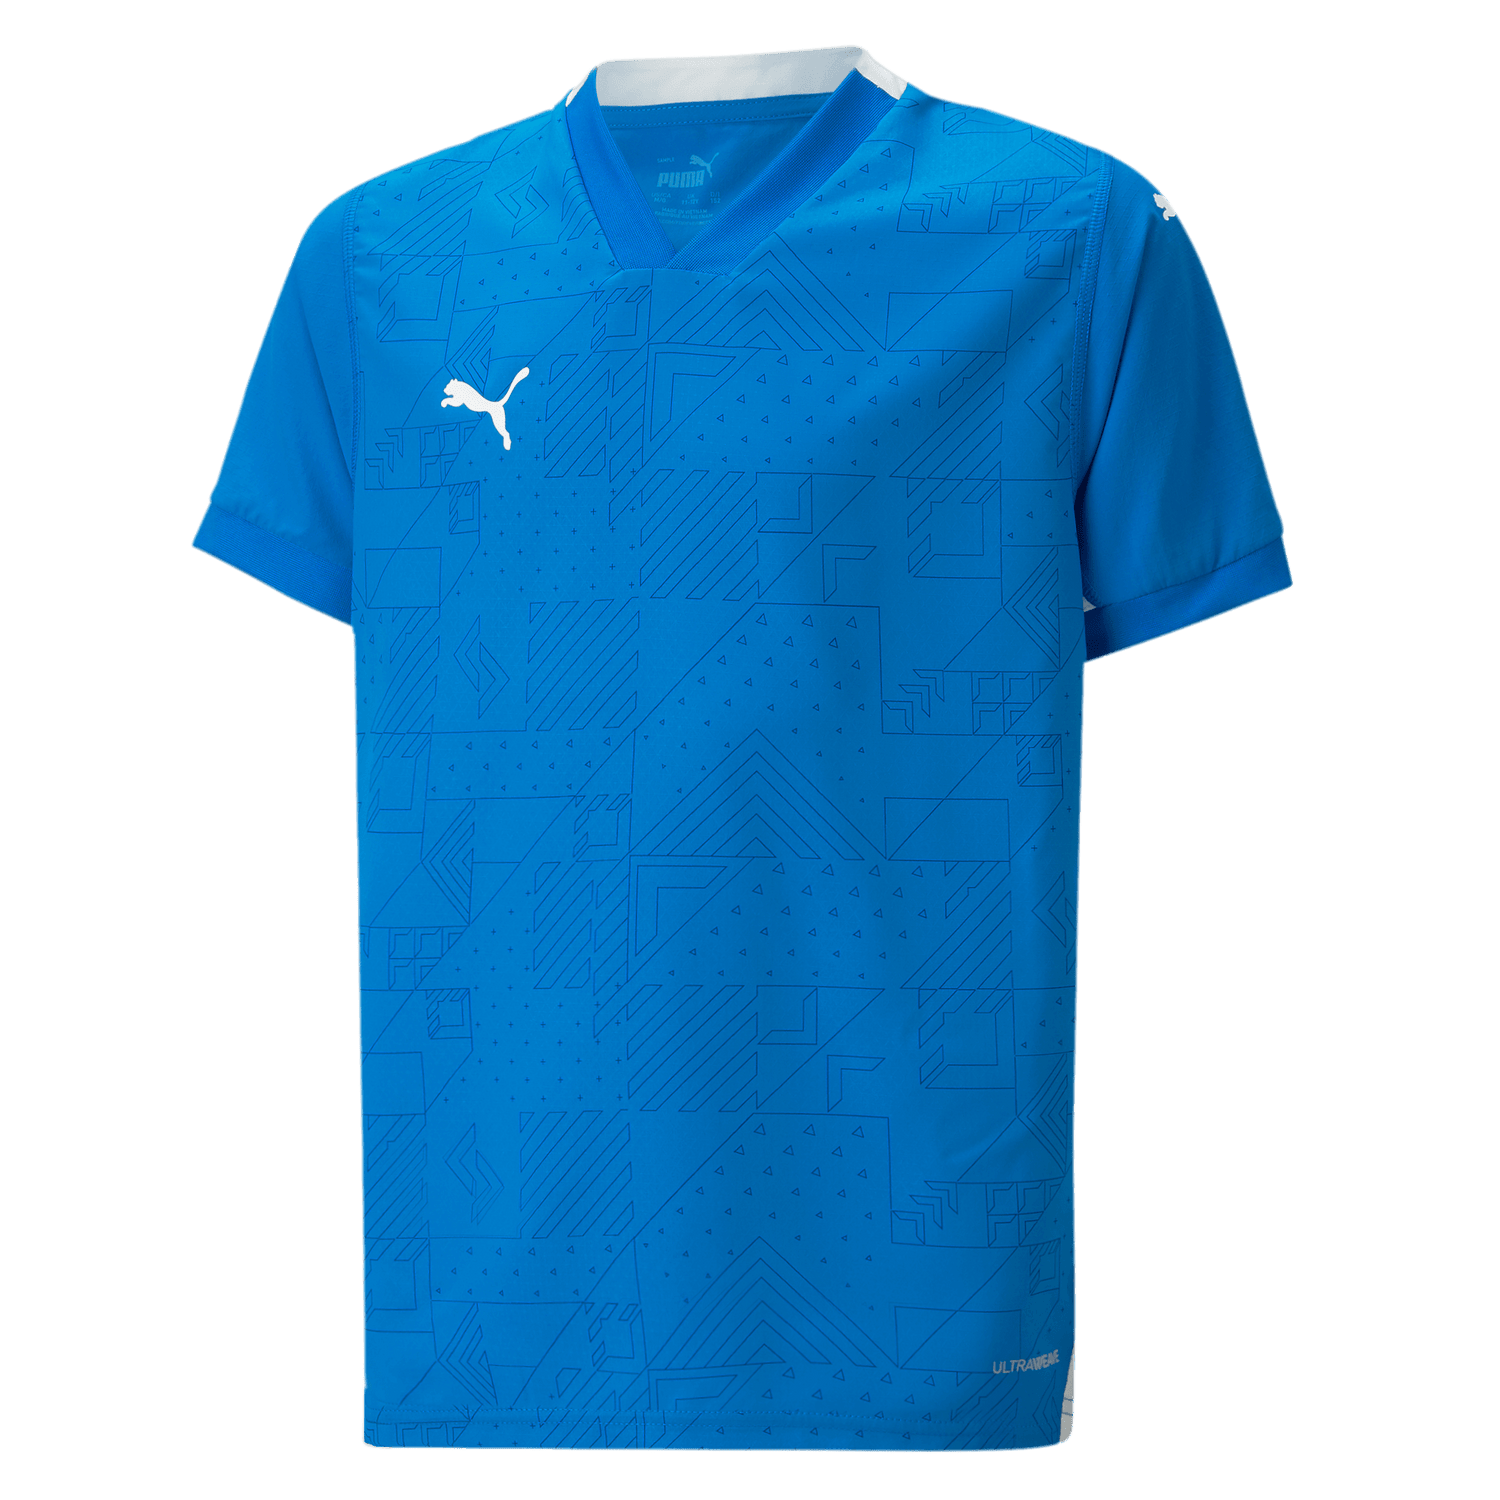 Puma Soccer Uniforms - Customizable Team Jerseys